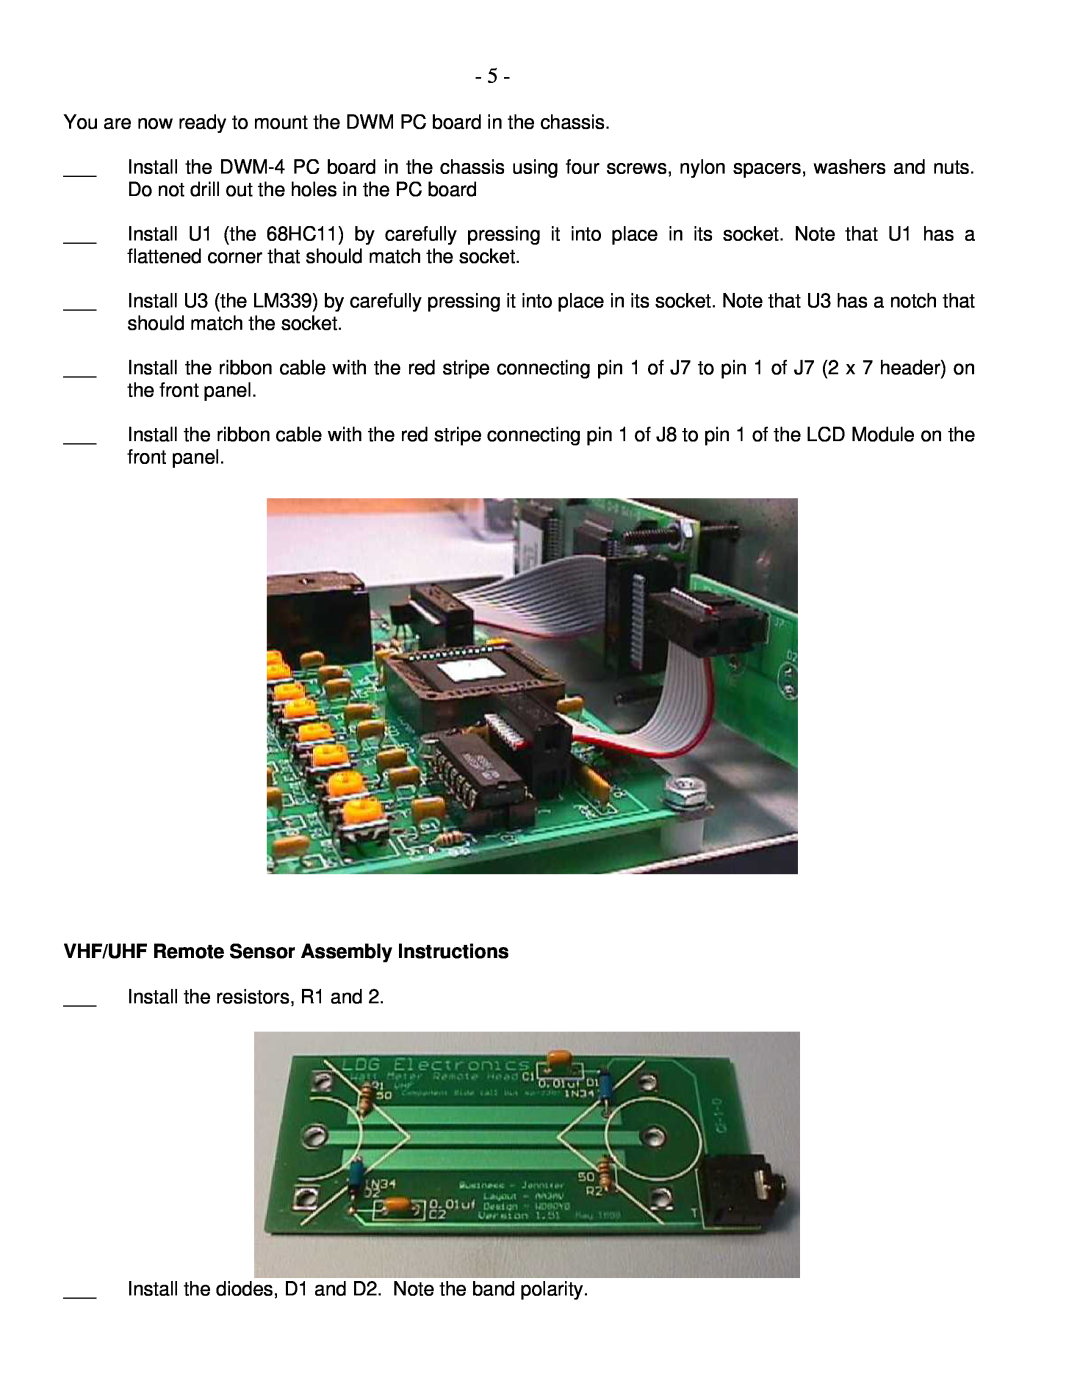 Macsense Connectivity DWM-4 manual VHF/UHF Remote Sensor Assembly Instructions 